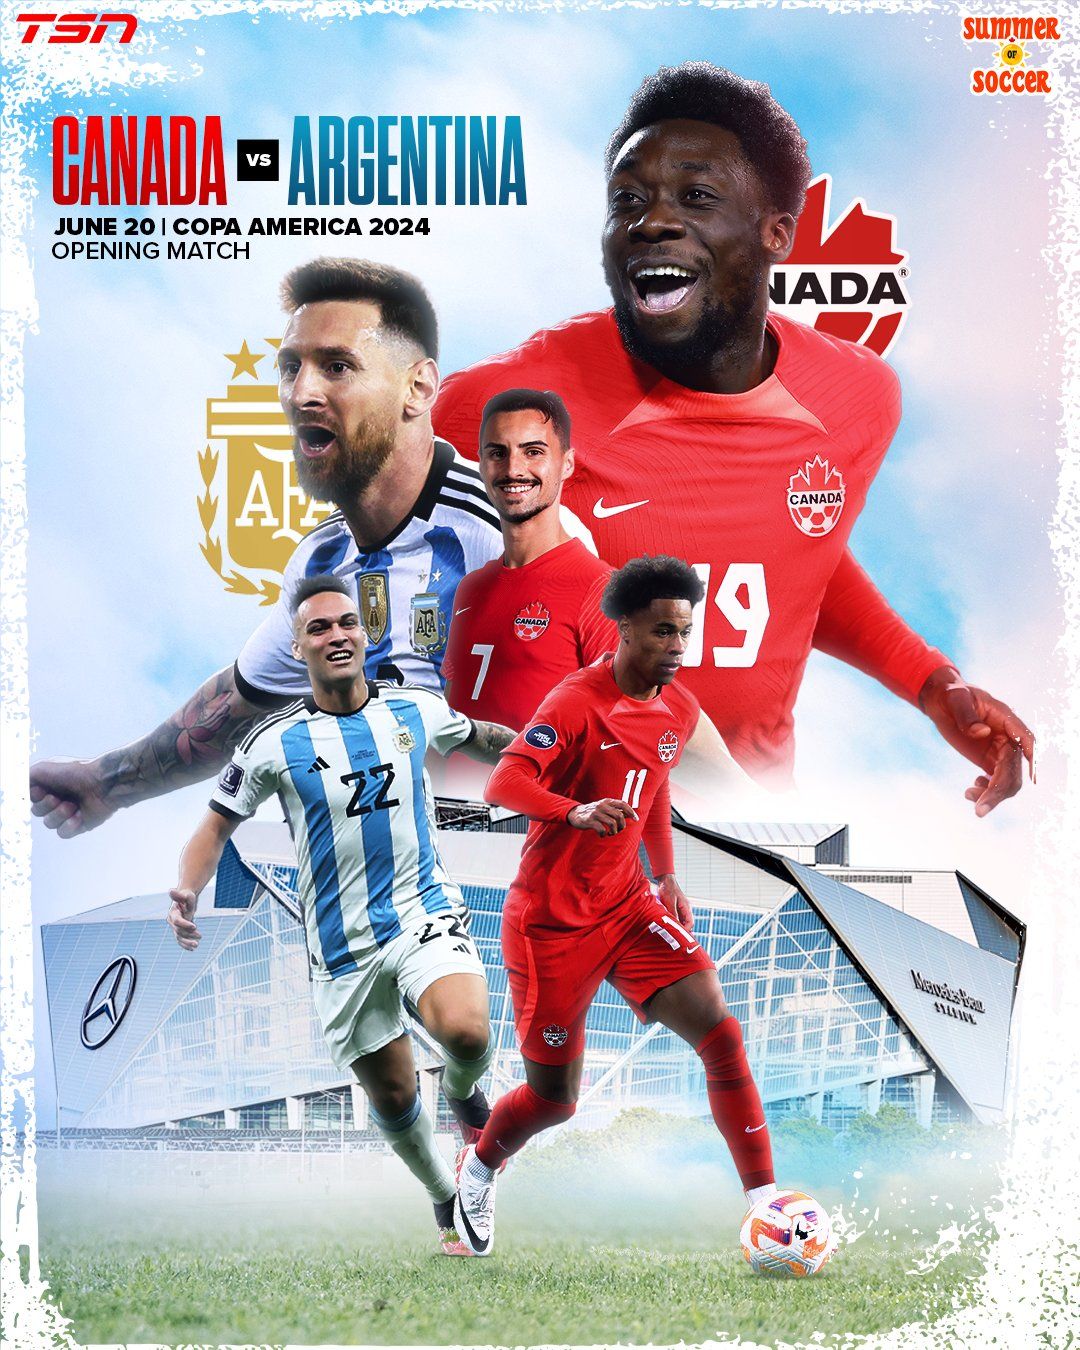 Copa America - Canada vs Argentina